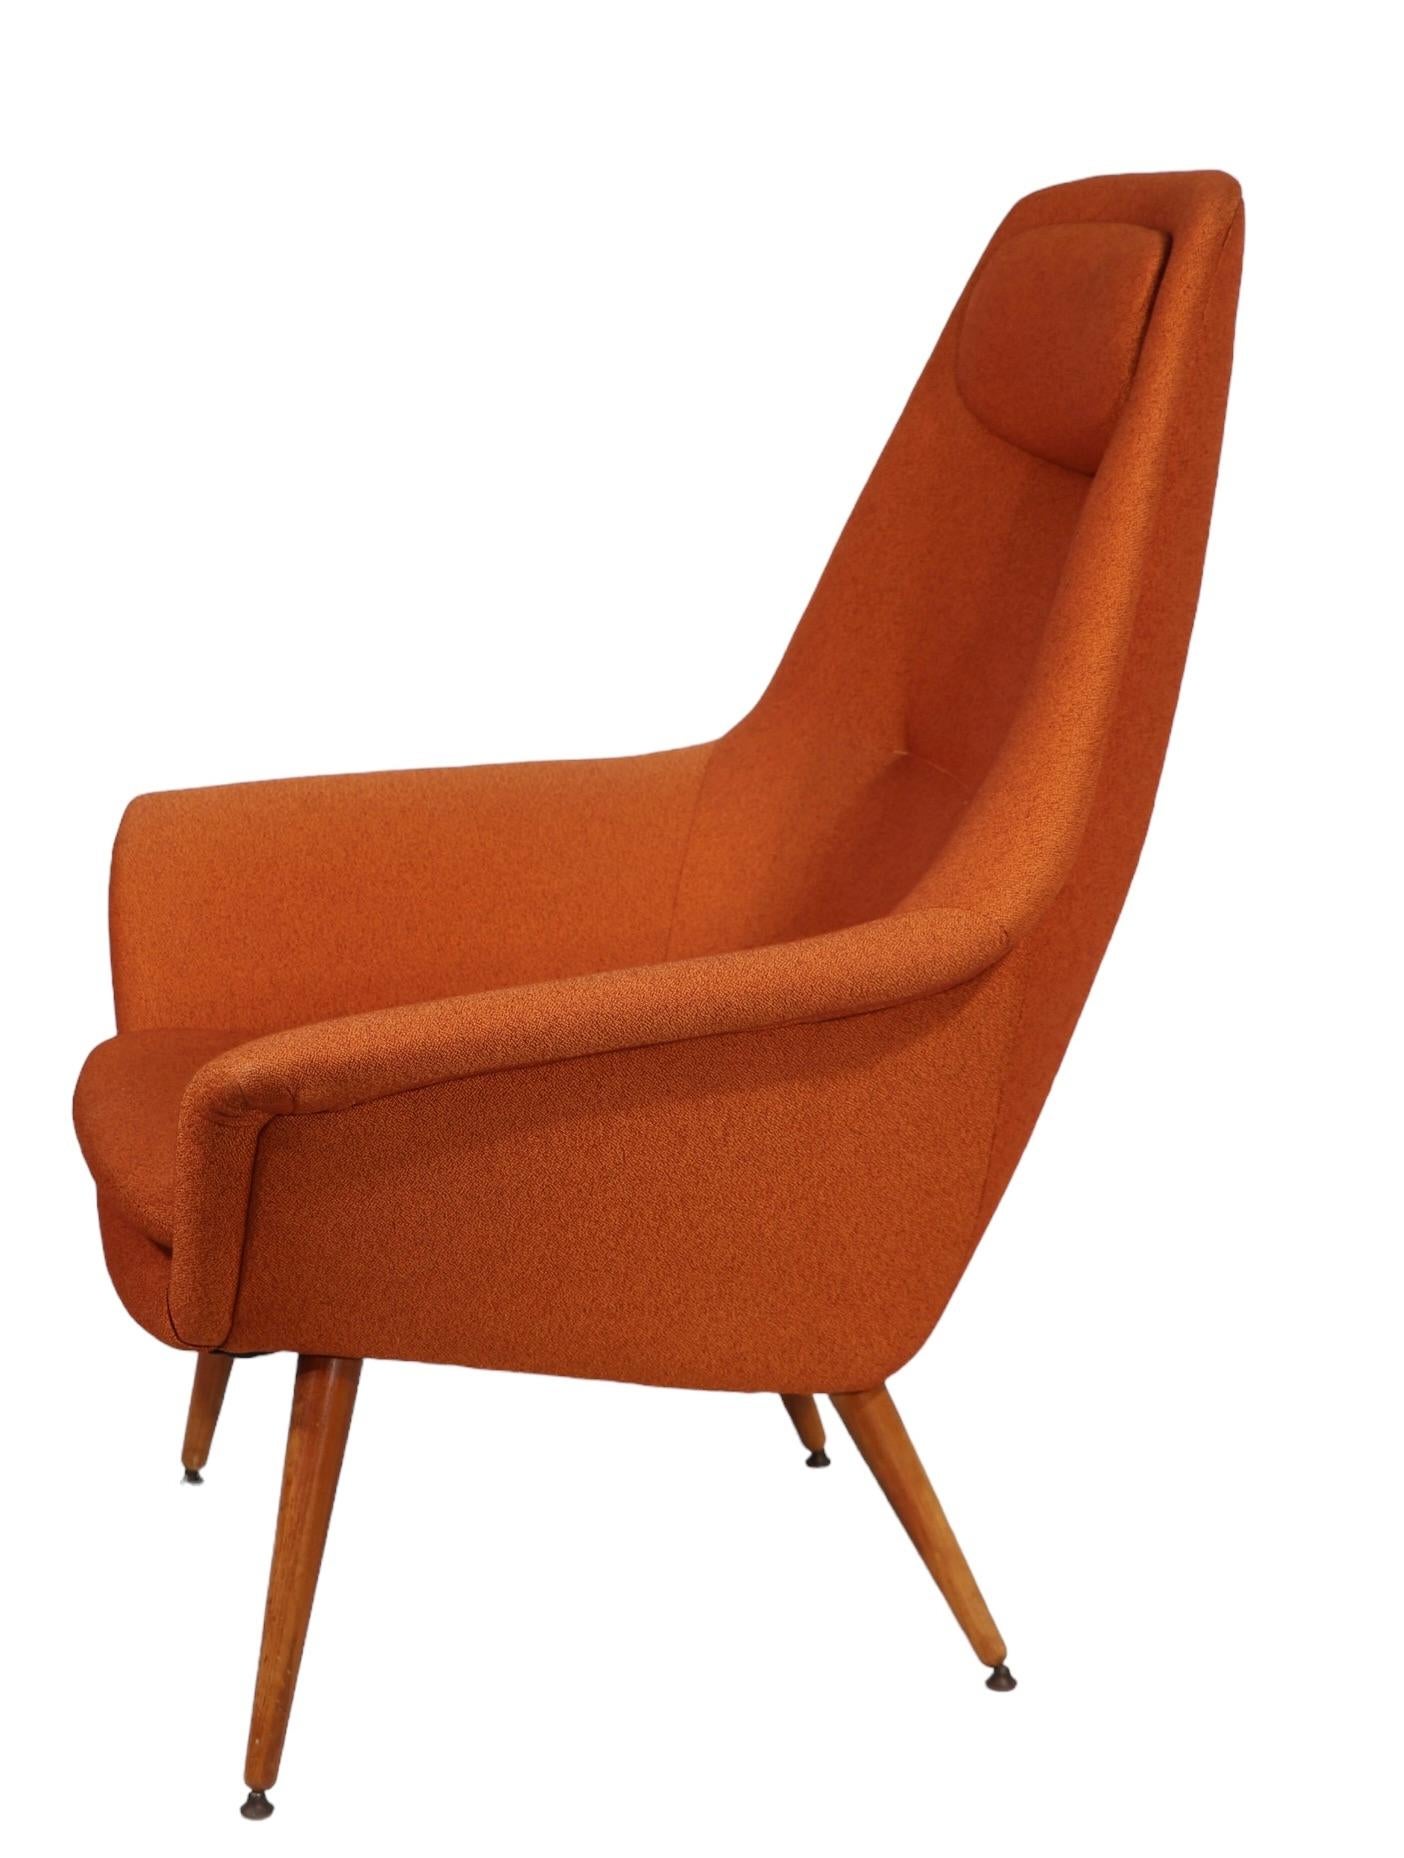  Torbjorn Afdal Bjarne Hansen Butterfly Chair Made in Norway c 1950's For Sale 12